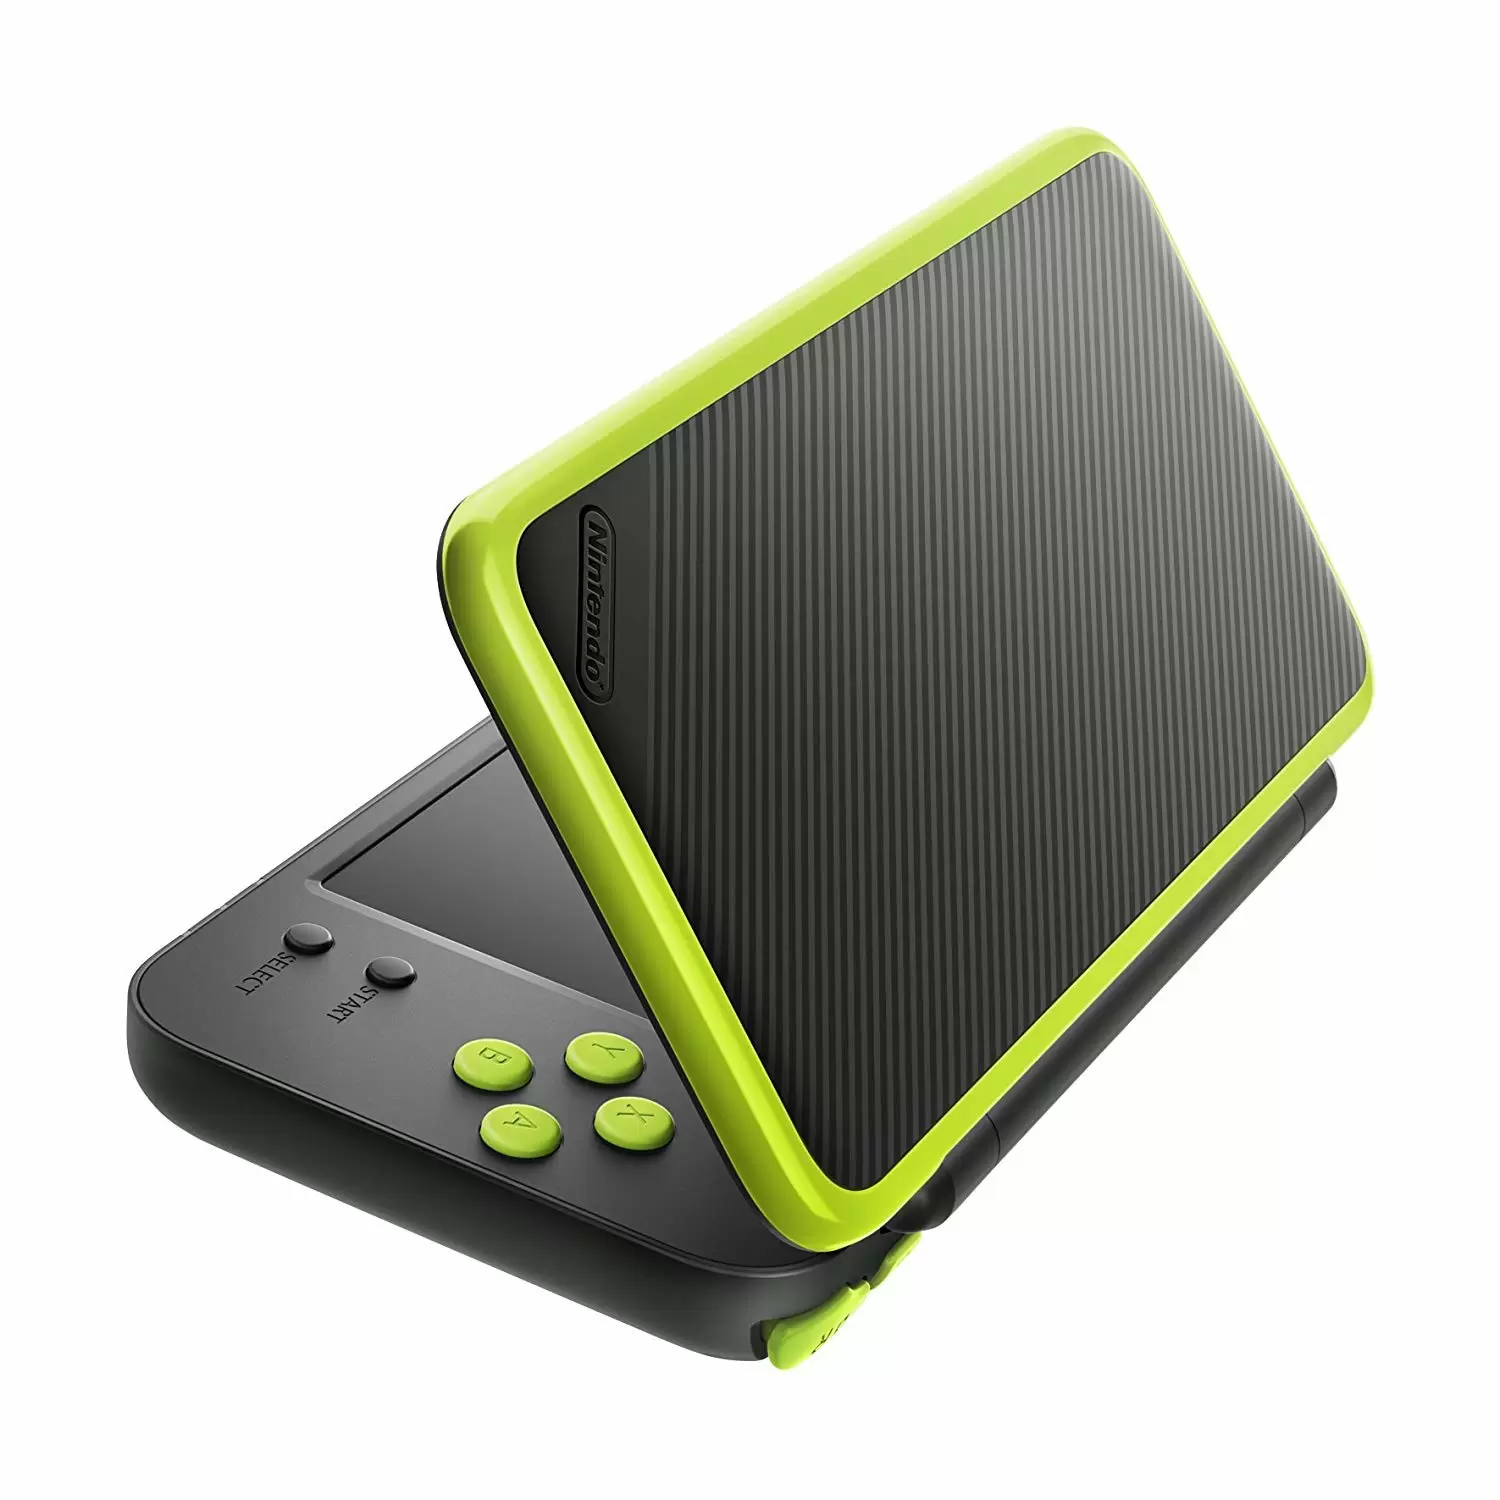 Nintendo 2DS Stuff - New Nintendo 2DS XL - Black & Lime Green